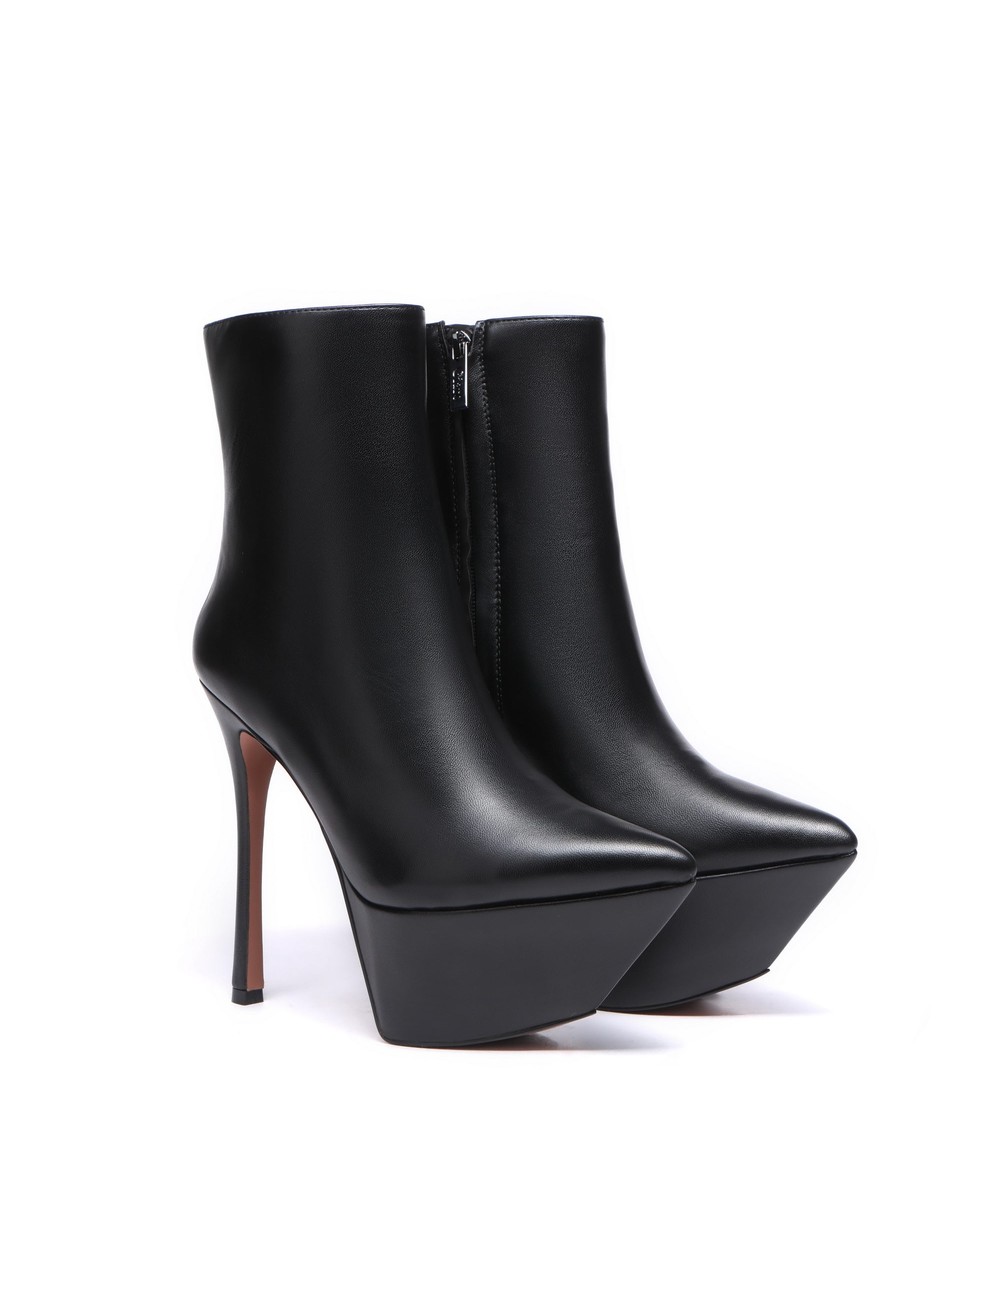 Giaro DELPHINA BLACK MATTE - Shoebidoo Shoes | Giaro high heels